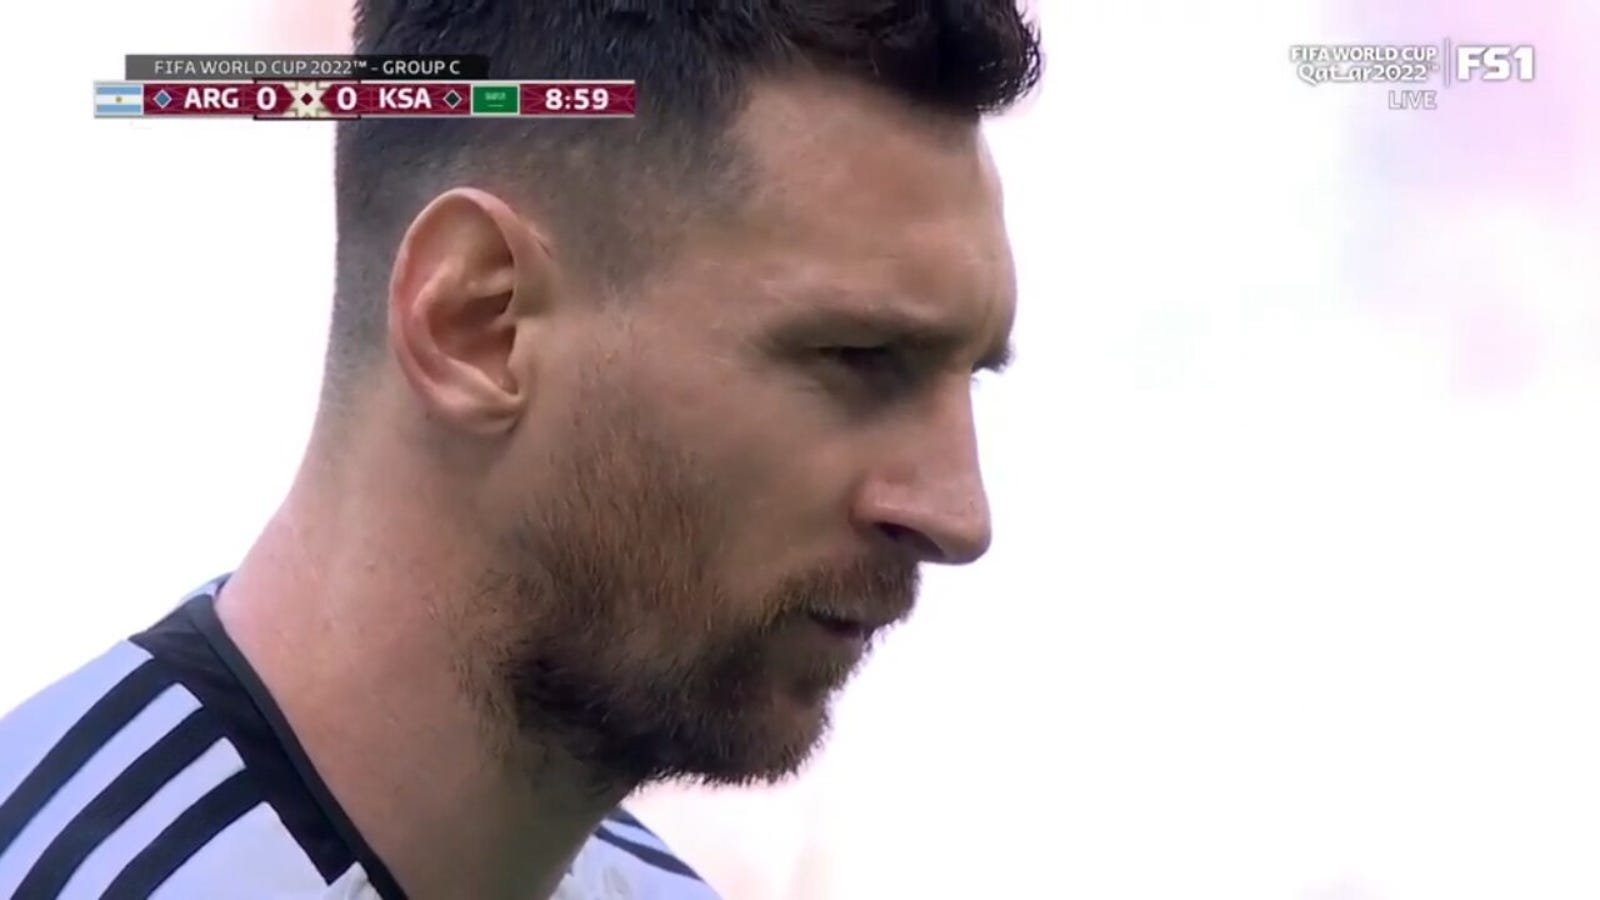 Lionel Messi scores a 10th-minute PK as Argentina take a 1-0 lead over Saudi Arabia